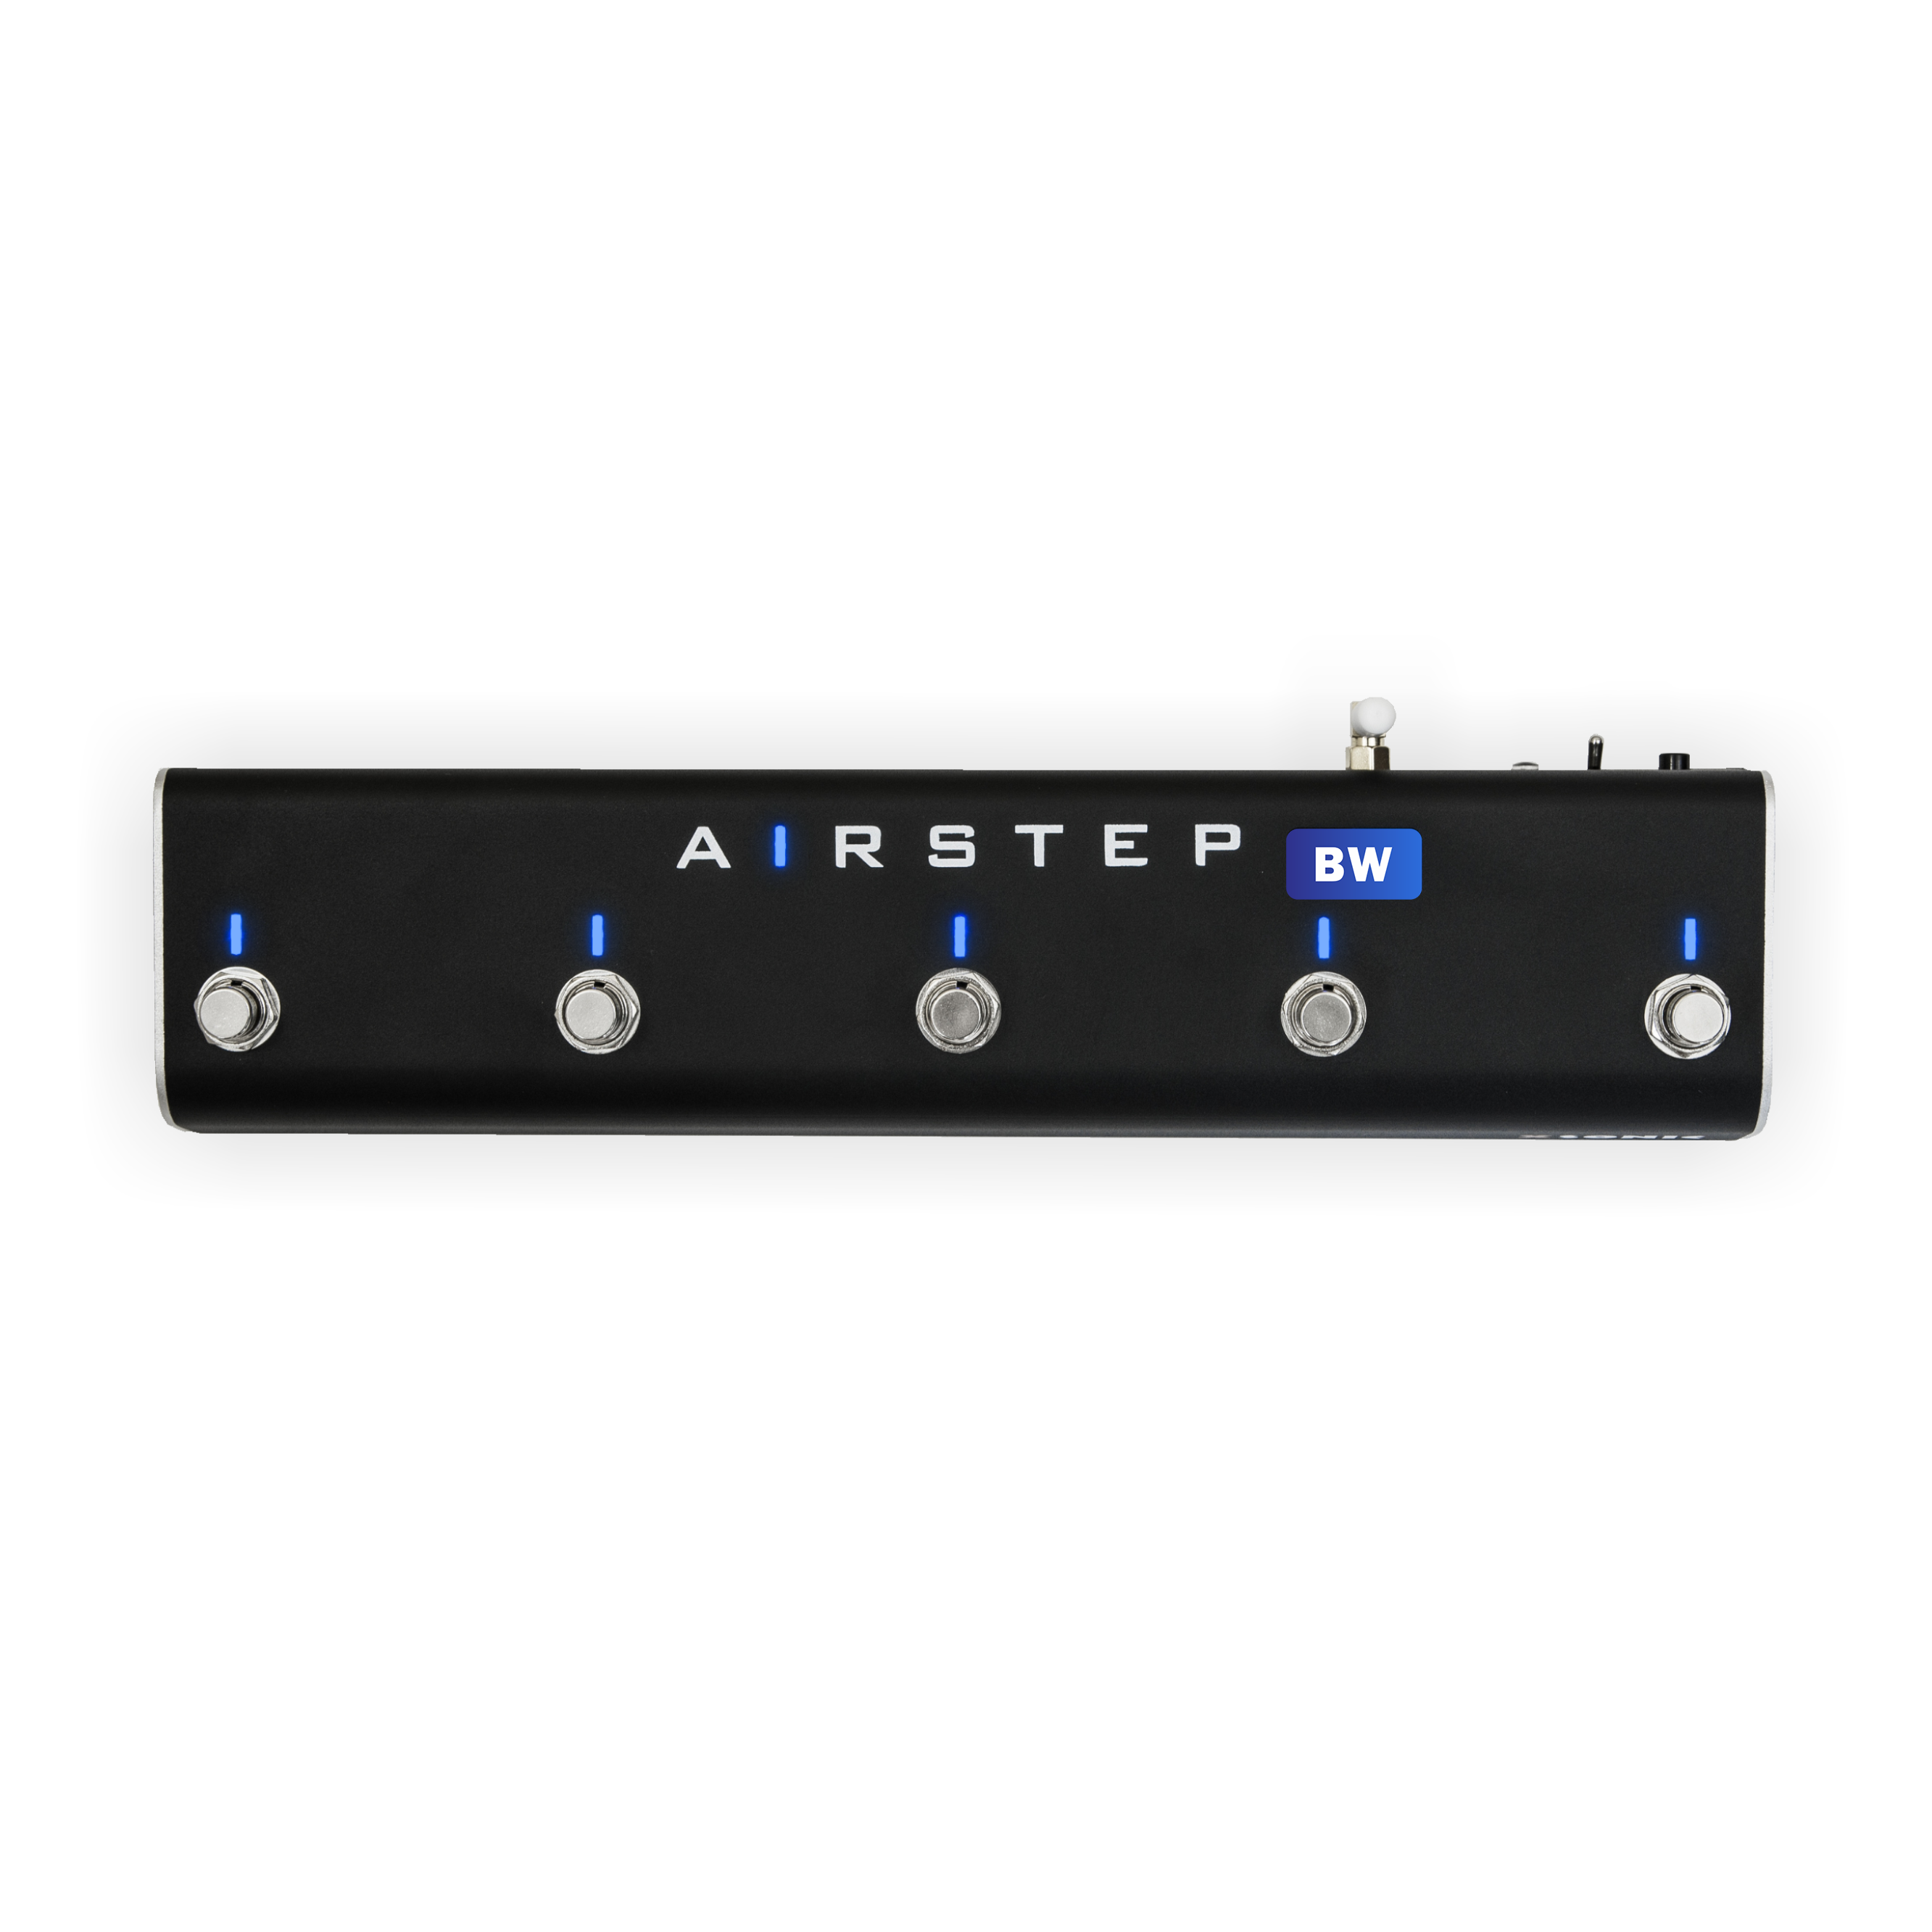 [B-Stock] AIRSTEP Lite | Smart Multi Controller